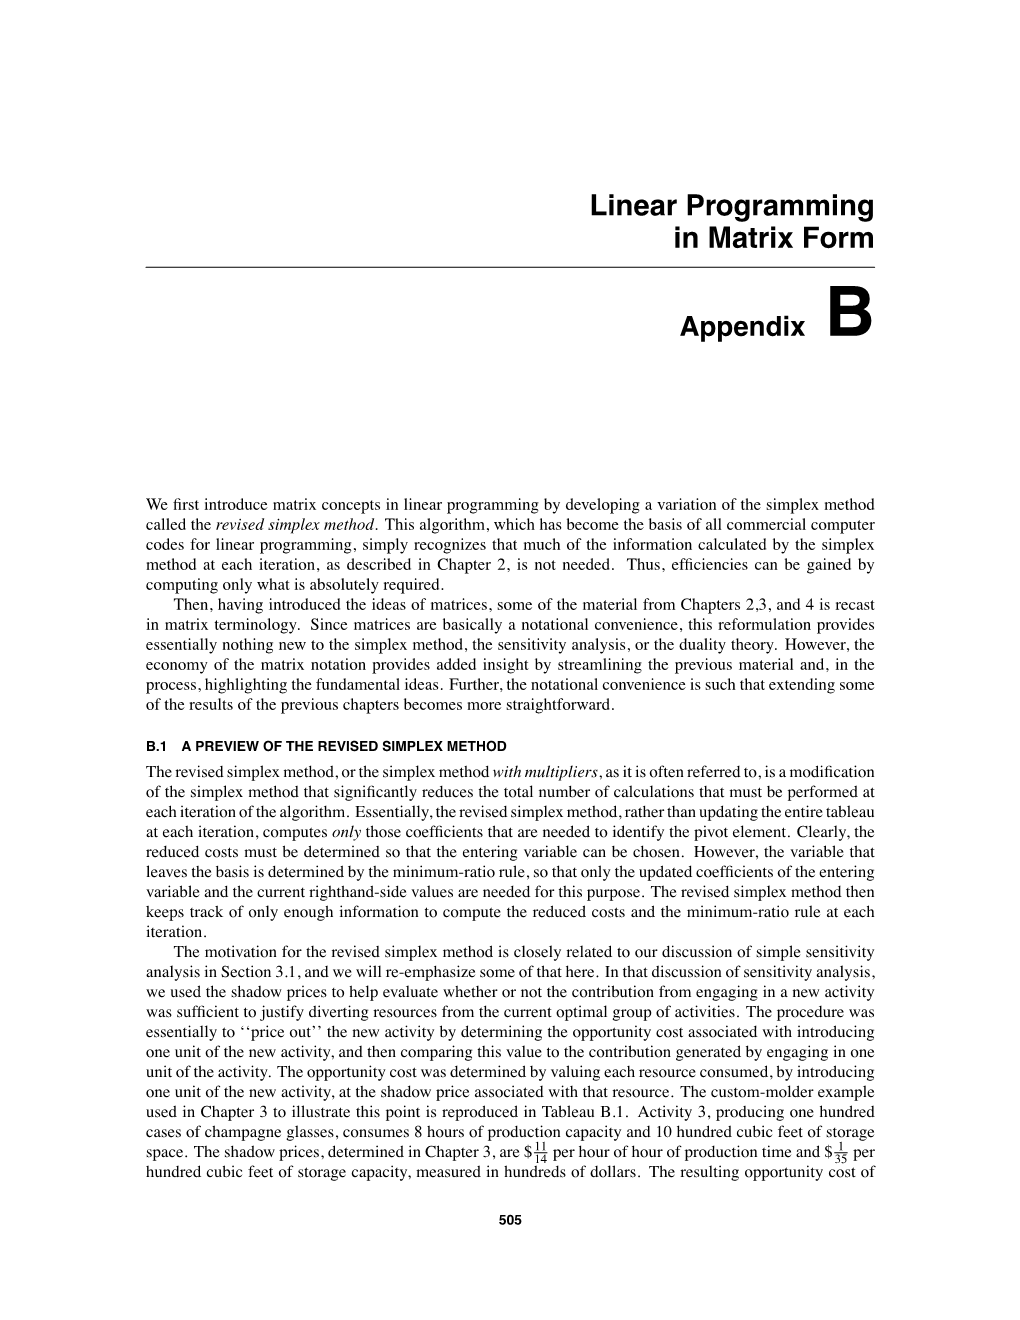 Linear Programming in Matrix Form